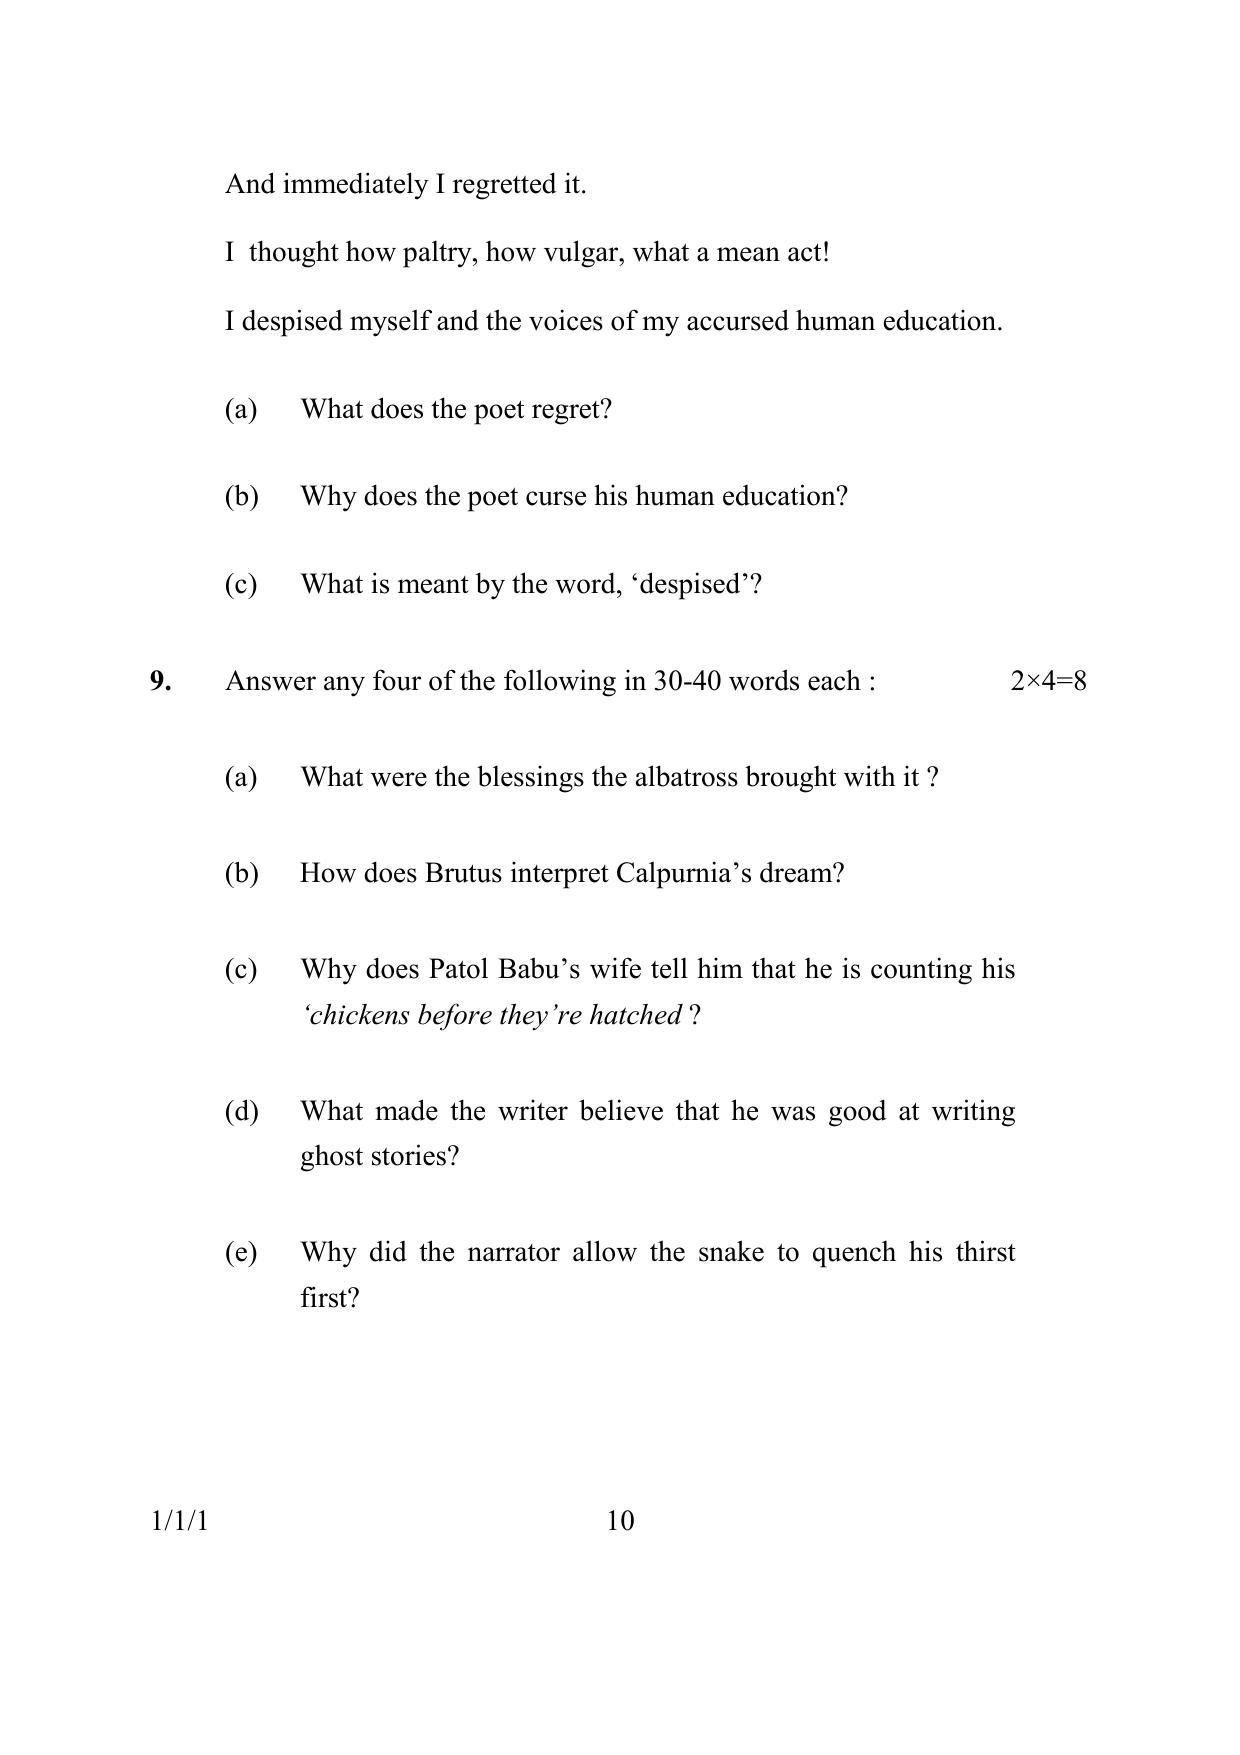 CBSE Class 10 1-1-1 ENGLISH COMMUNICATIVE 2016 Question Paper - Page 10